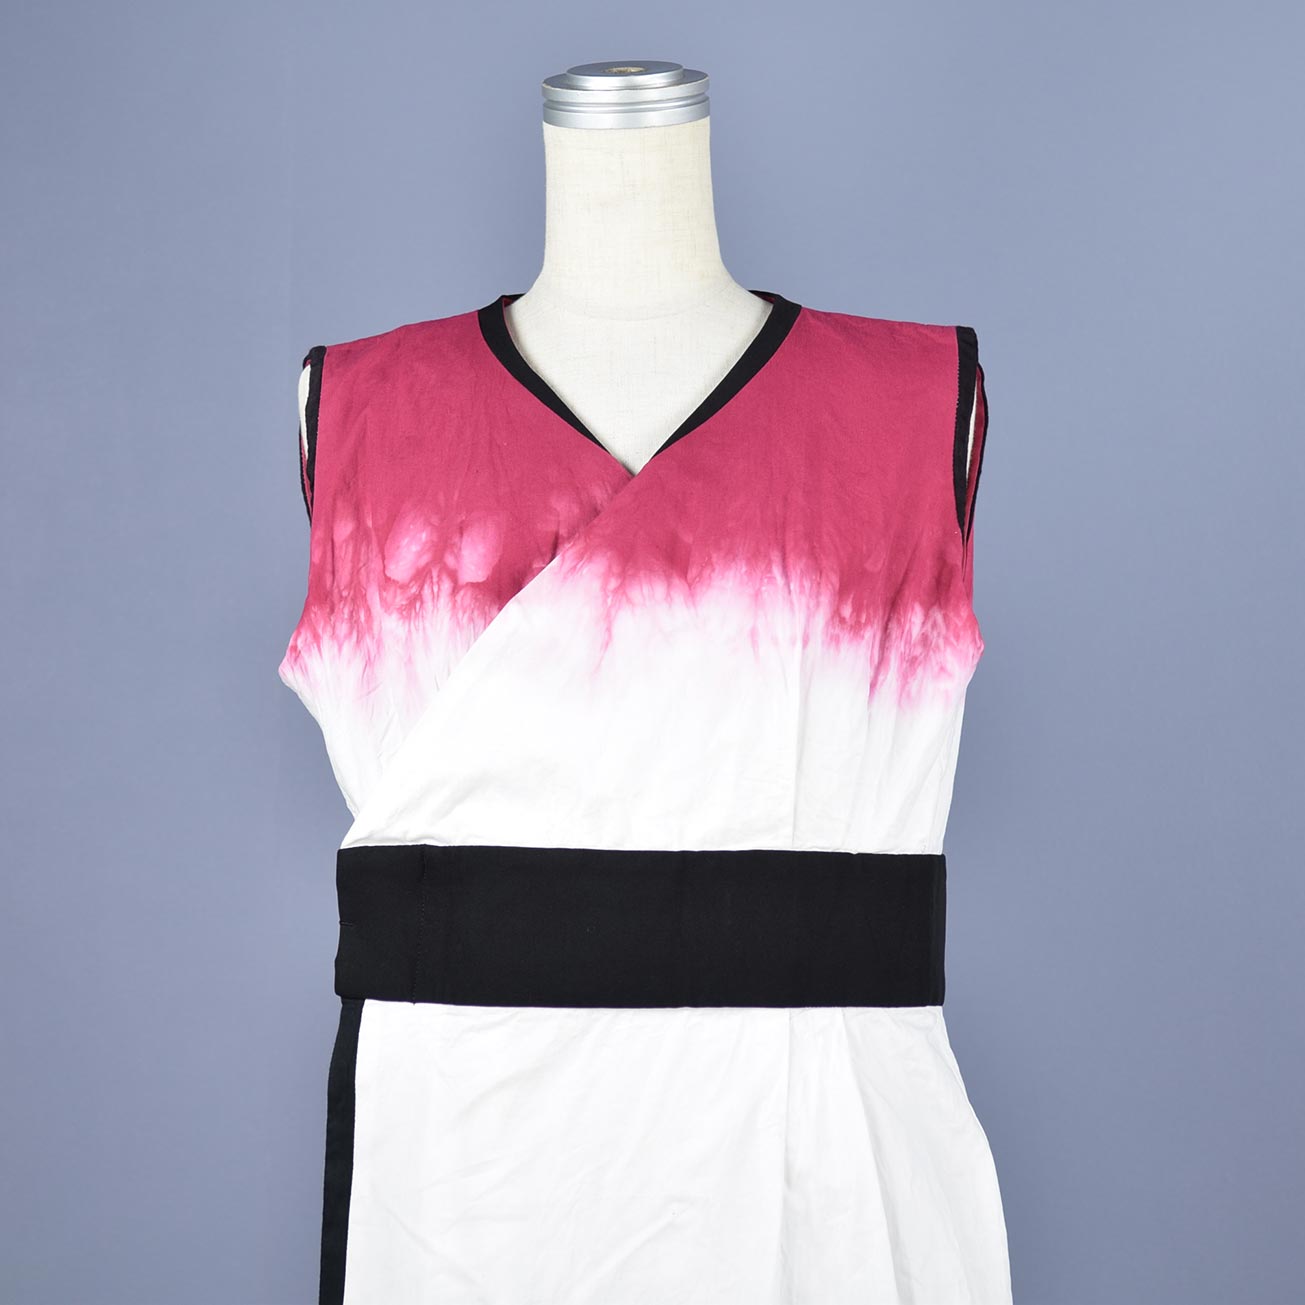 GOUK 2 color dyed sleeveless dress